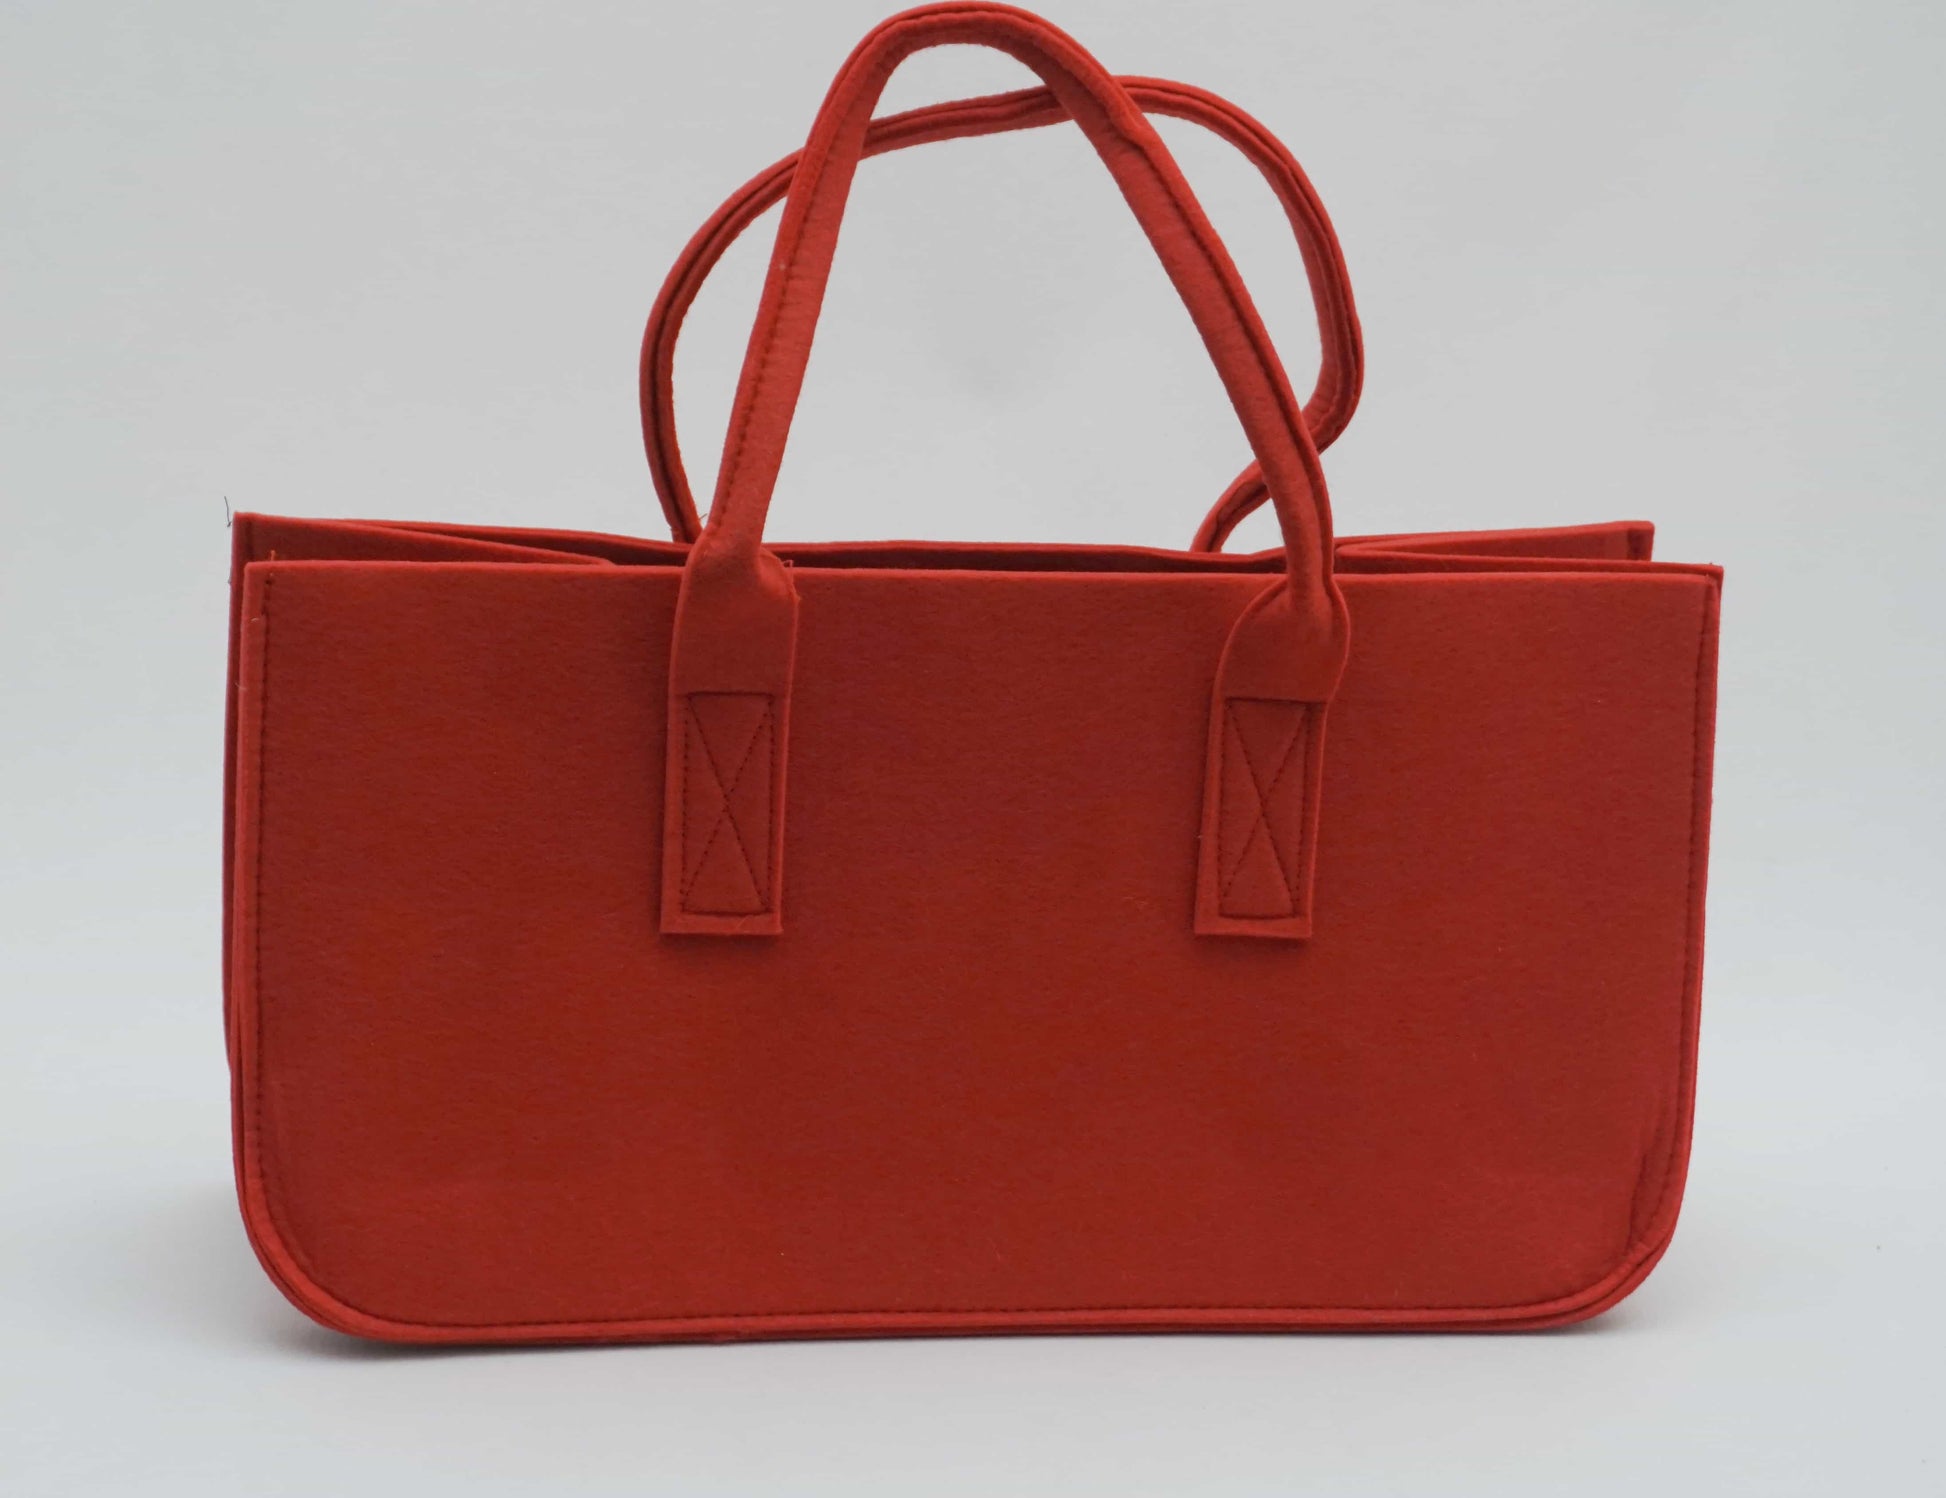 Tasche für Kaminholz aus rotem Filz 50x25x25cm